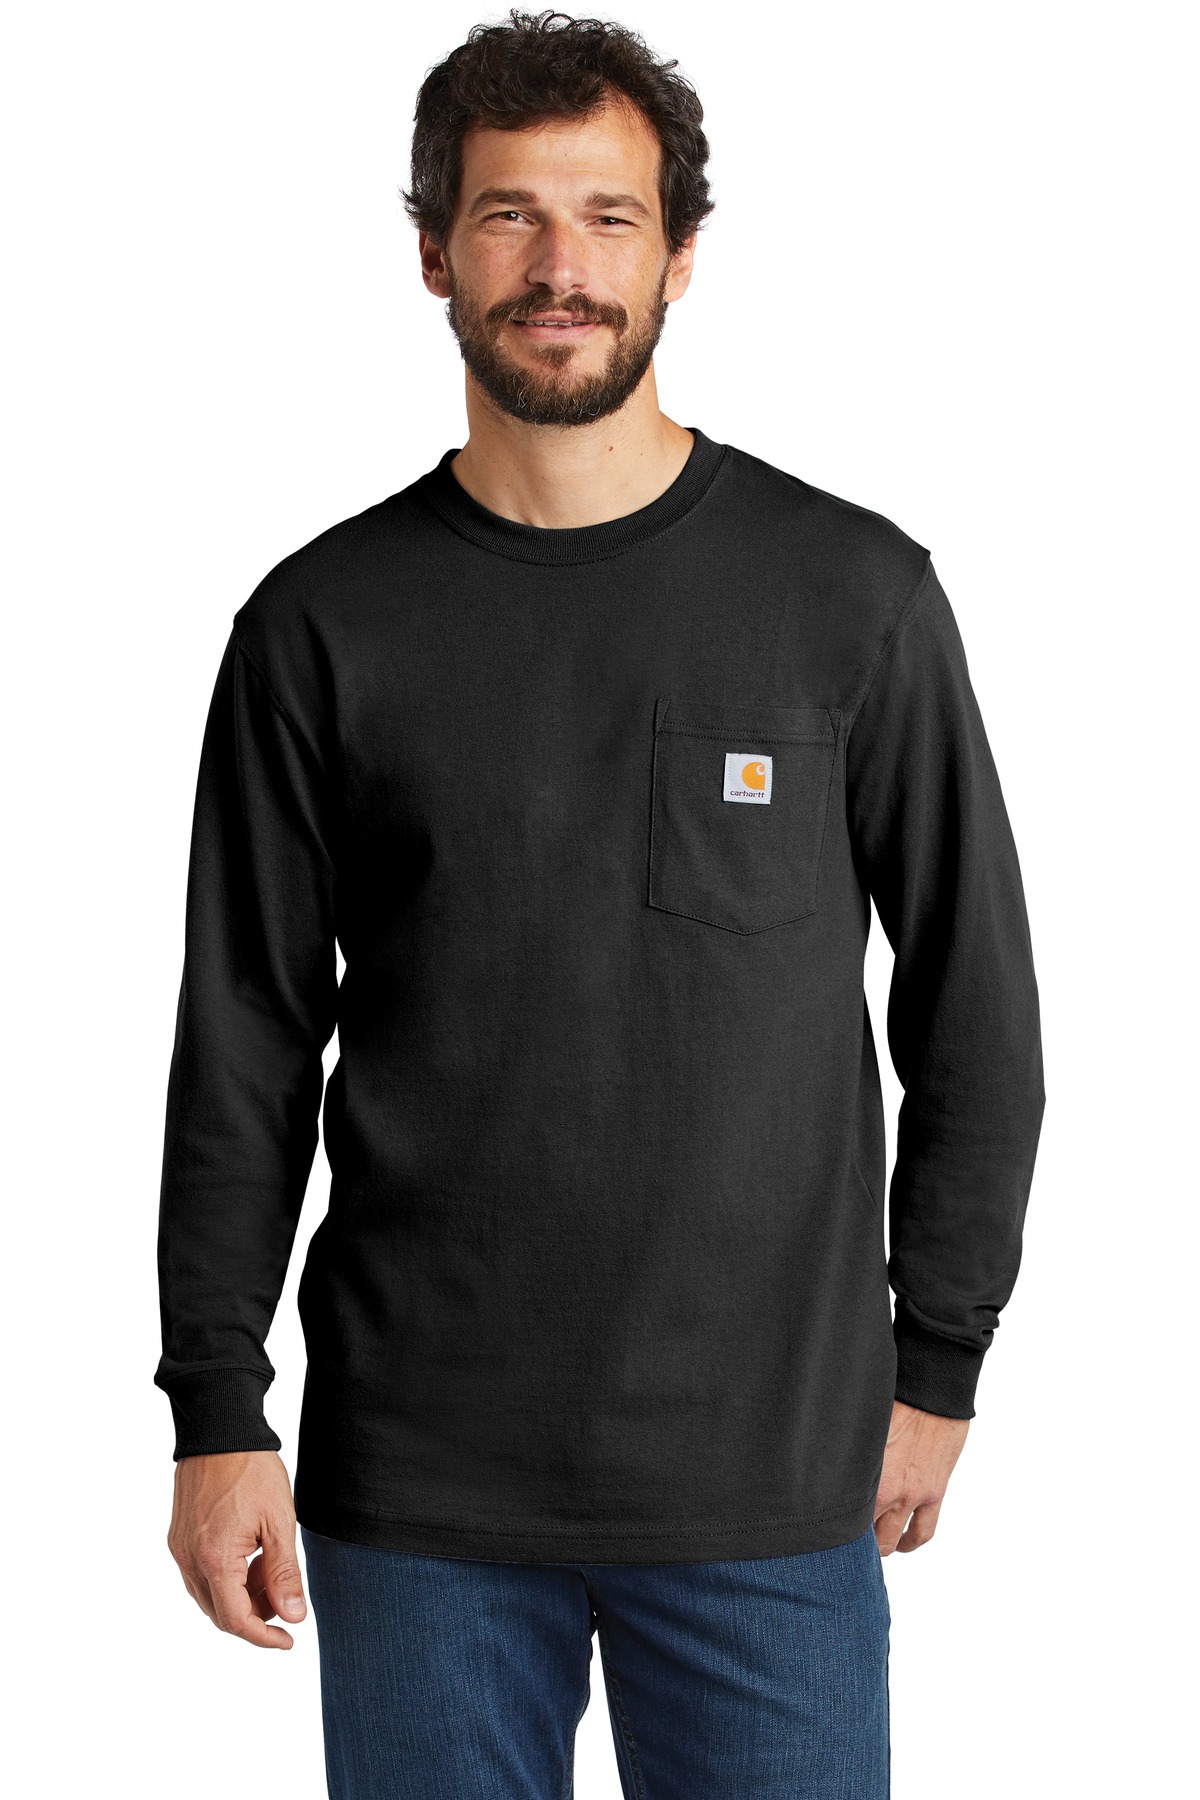 Carhartt Workwear Pocket Long Sleeve T-Shirt-